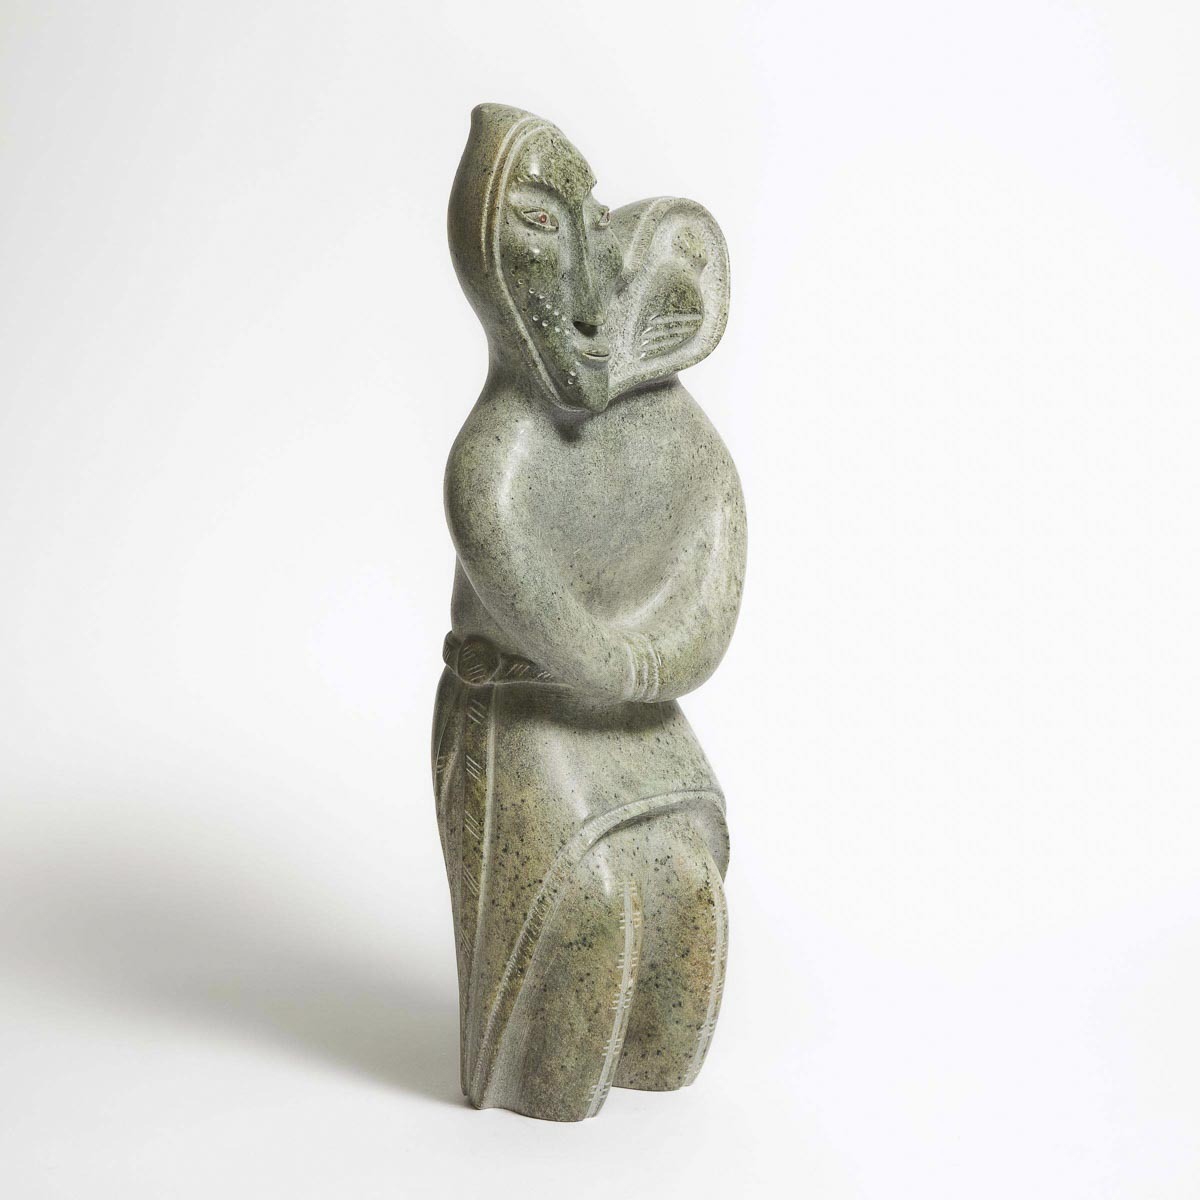 David Ruben Piqtoukun ᑎᕕᑎ ᐱᑐᑯ ᕈᐱᐃᓐ (b. 1950), WOMAN WITH OWL, 2011, stone, catlinite, 19.25 x 17.25 - Image 3 of 6